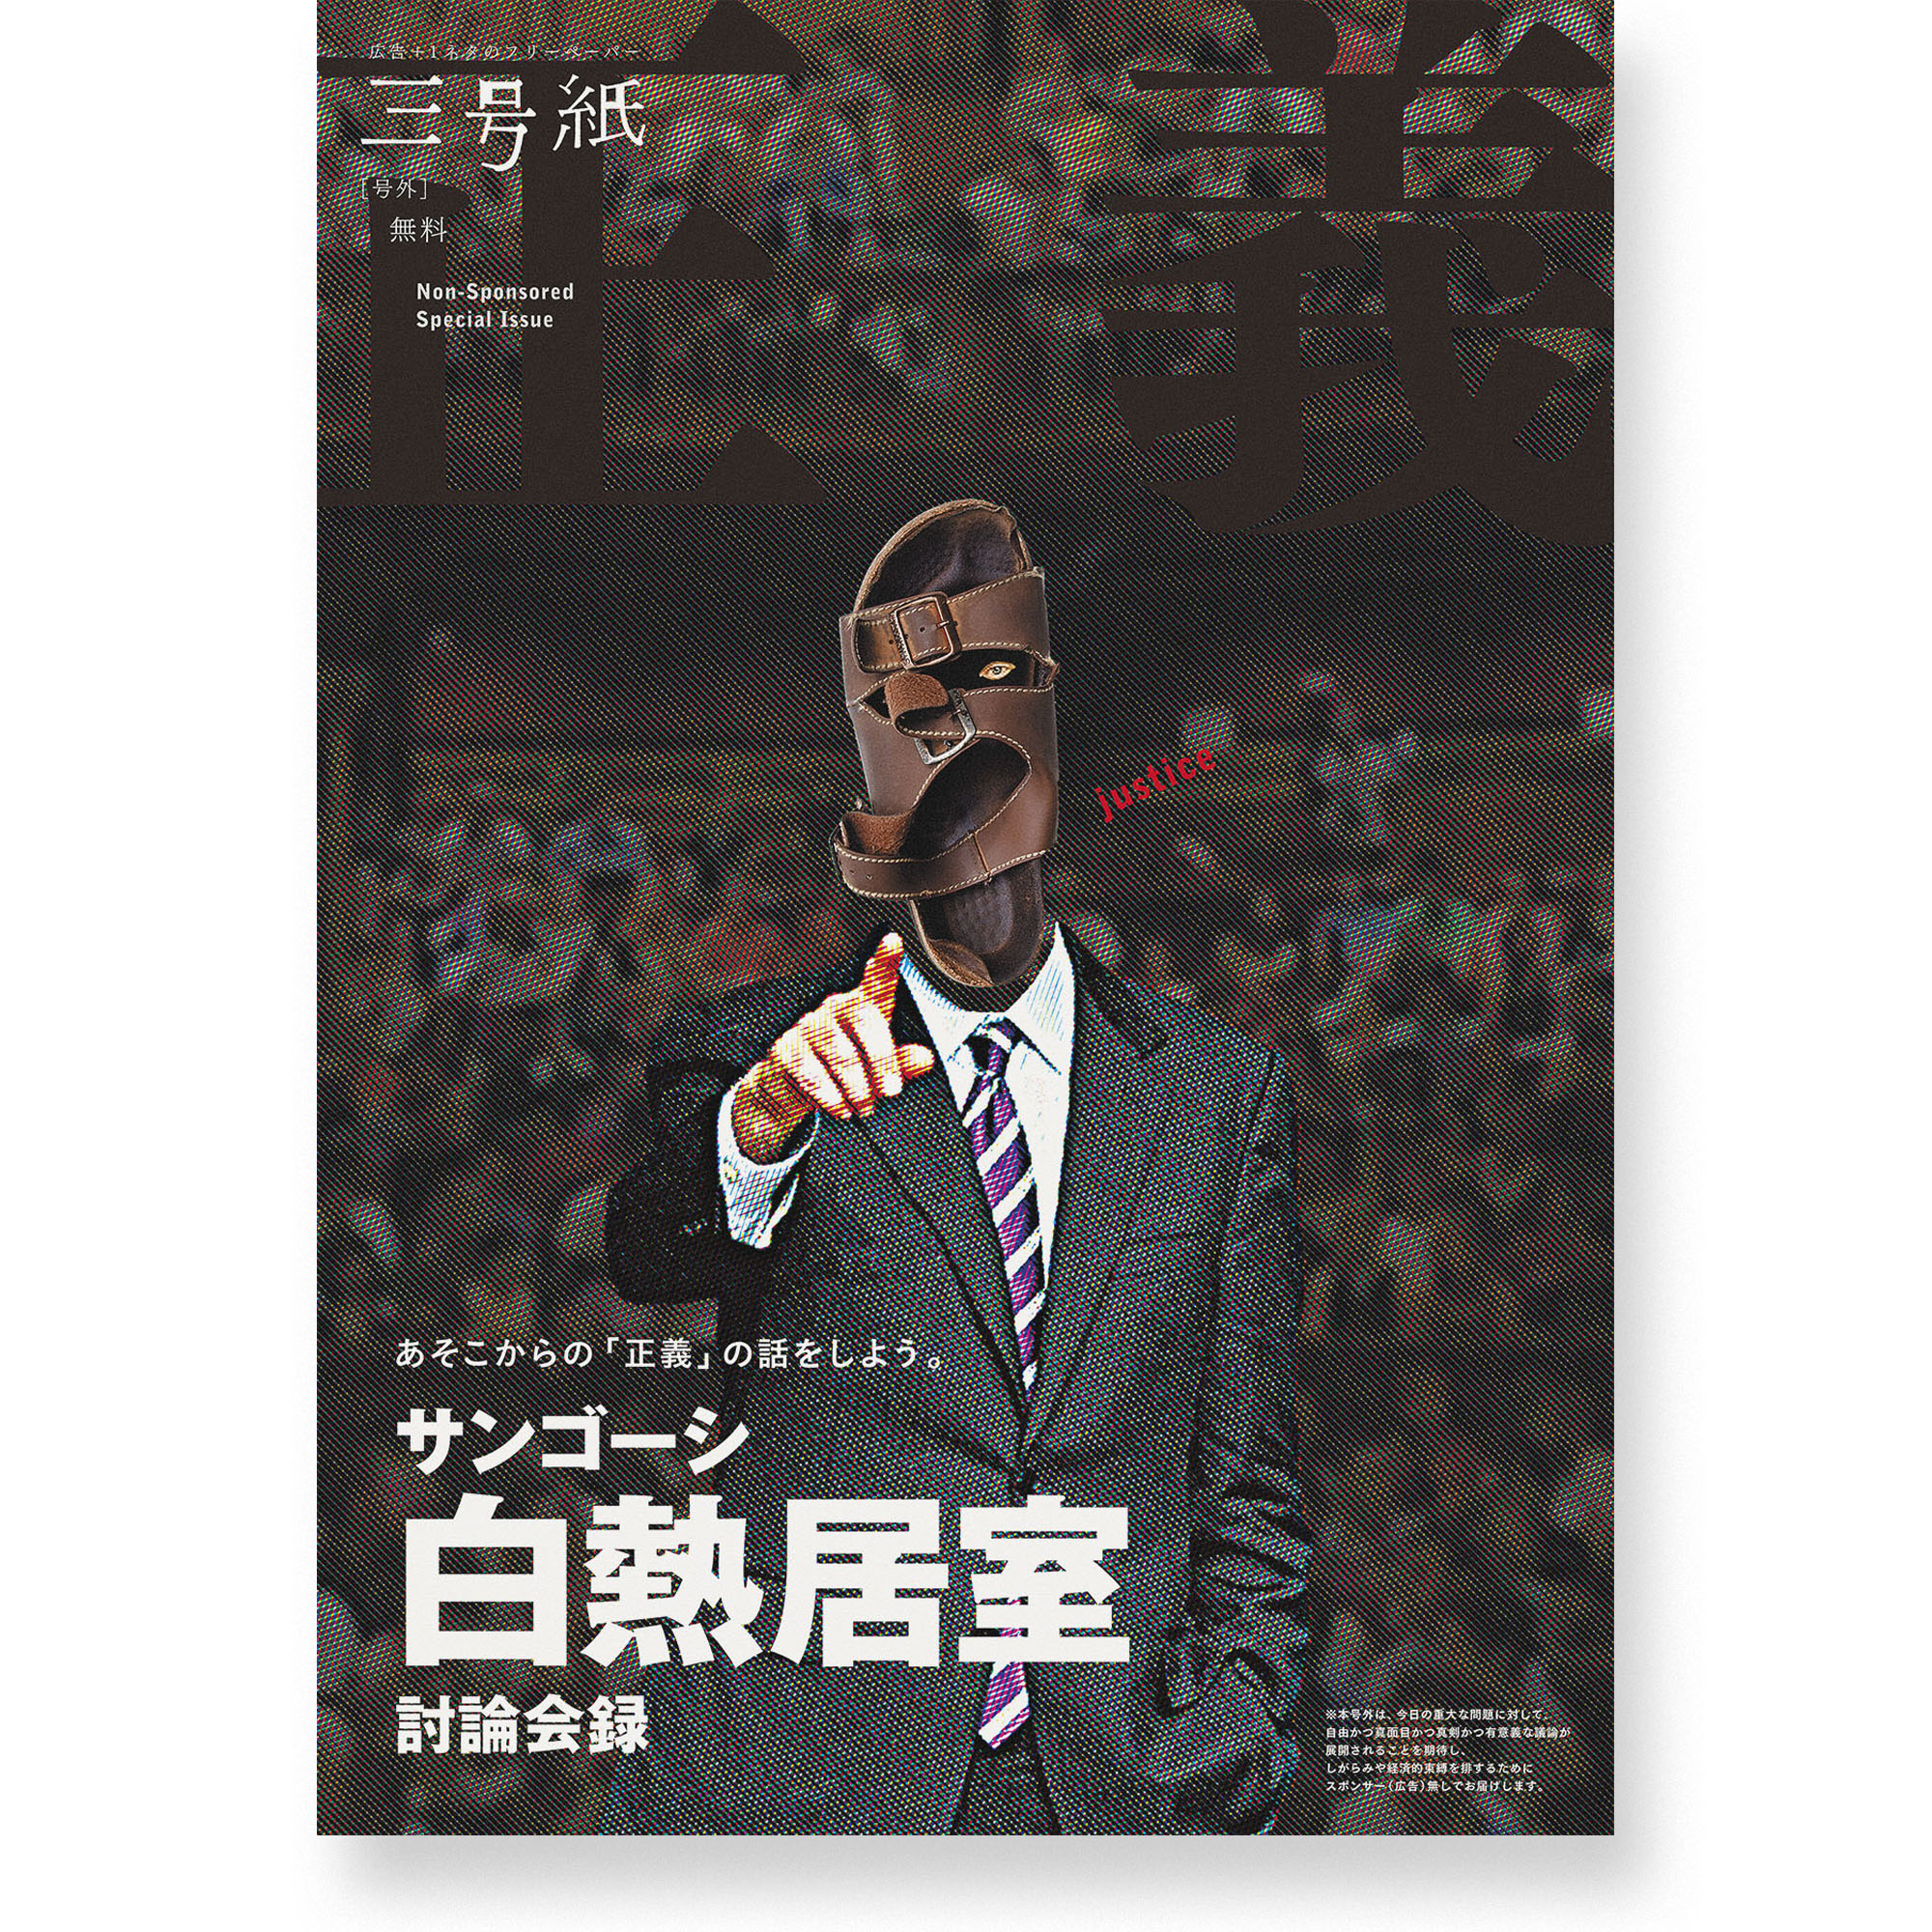 Sango-shi, Non-sponsored Special Issue